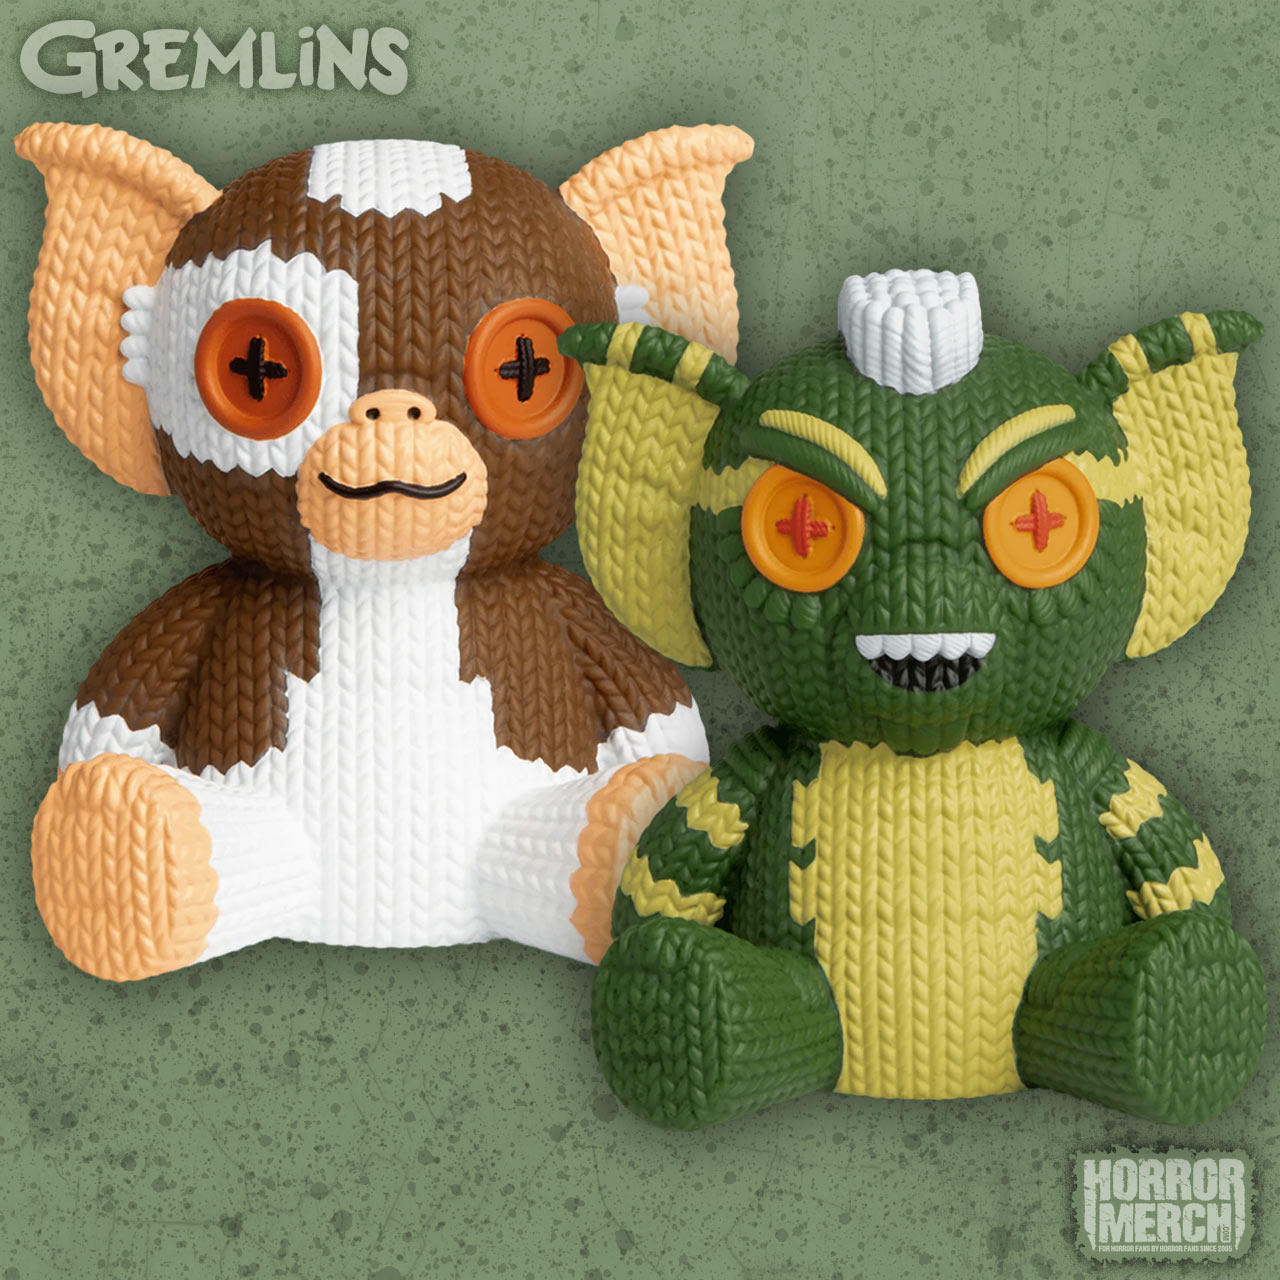 Gremlins Knit Style Figures [Figure]